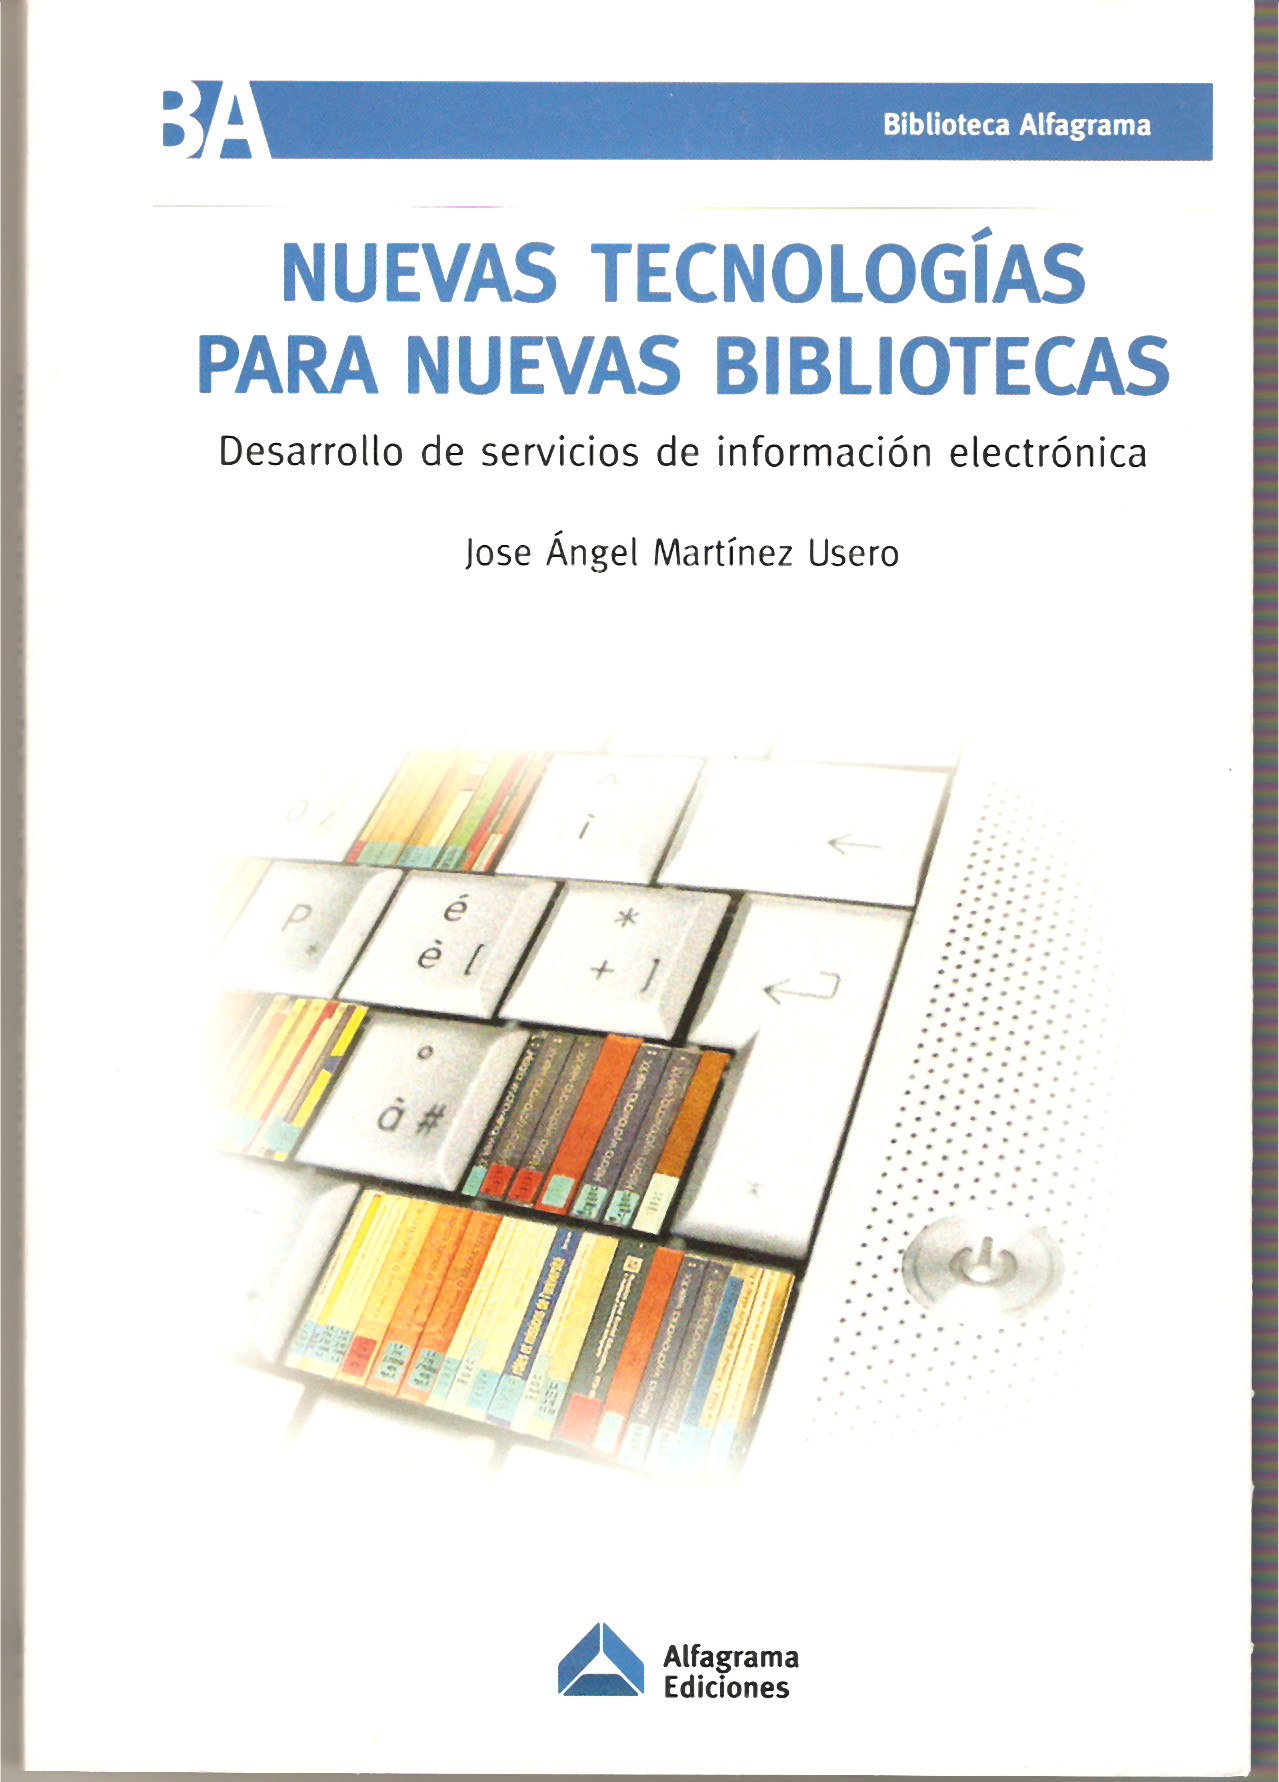 Biblioteca digital